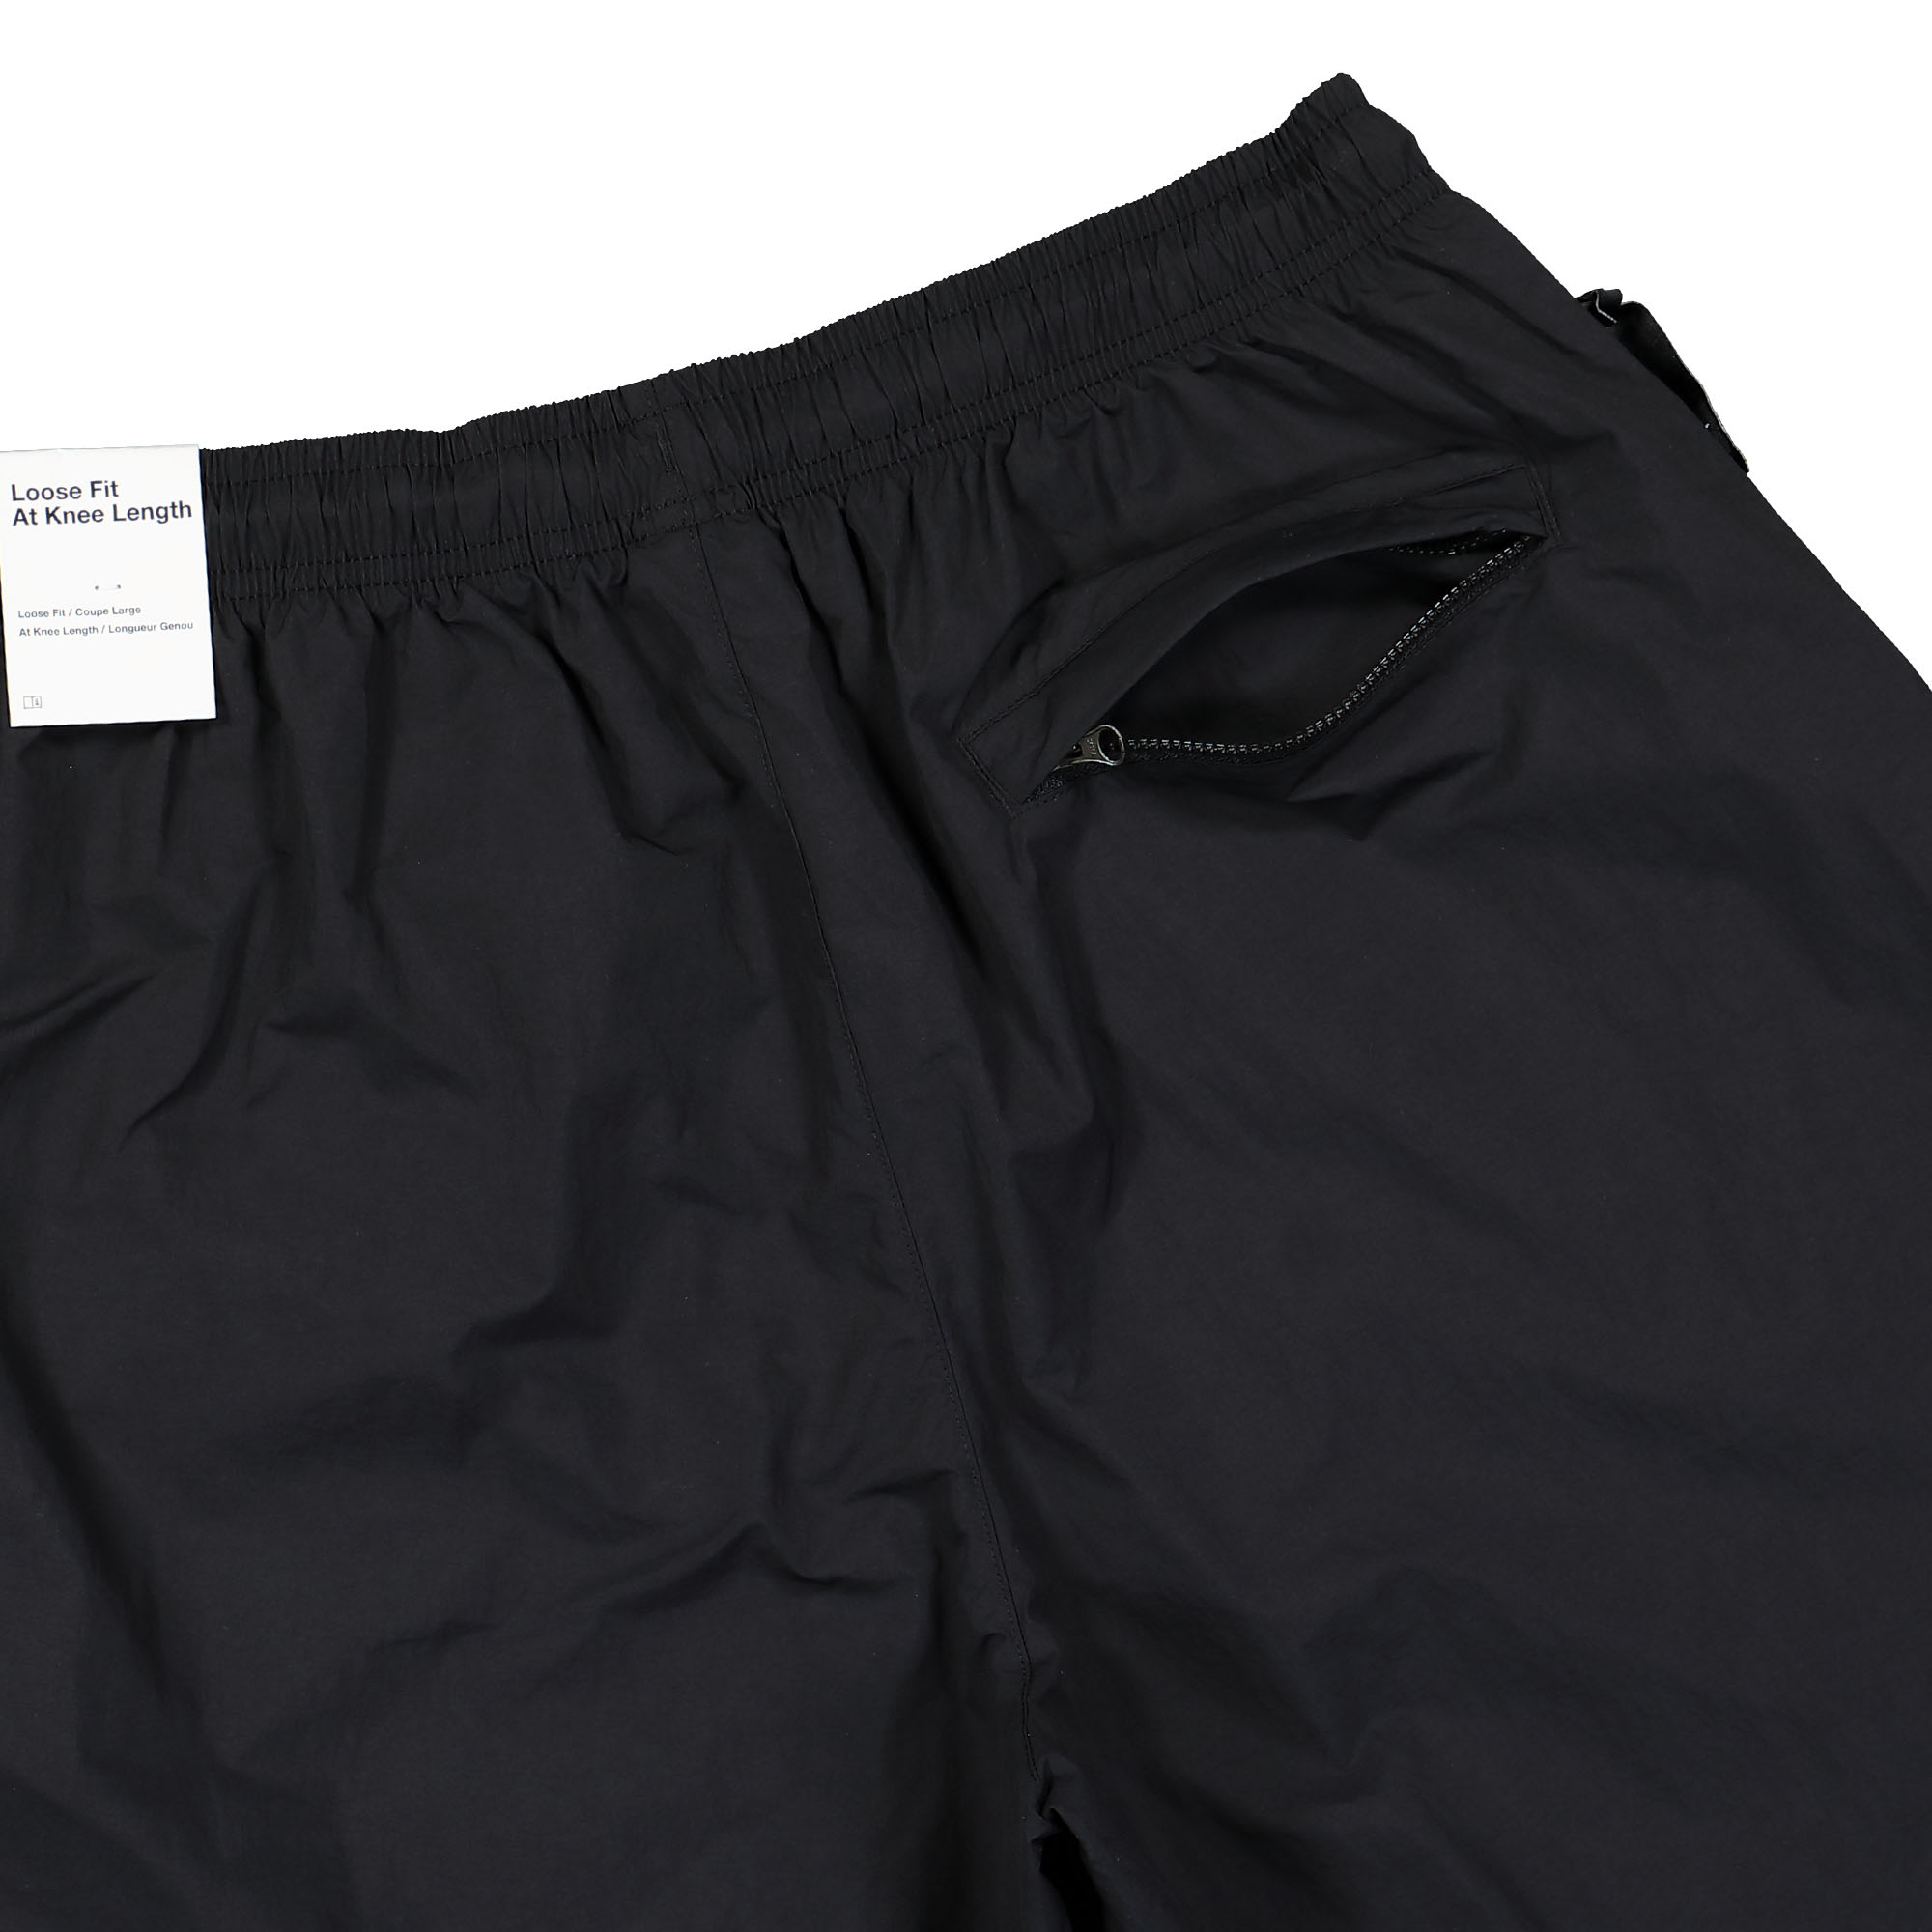 Nike Solo Swoosh Men's Woven Shorts Preto DX0749-010